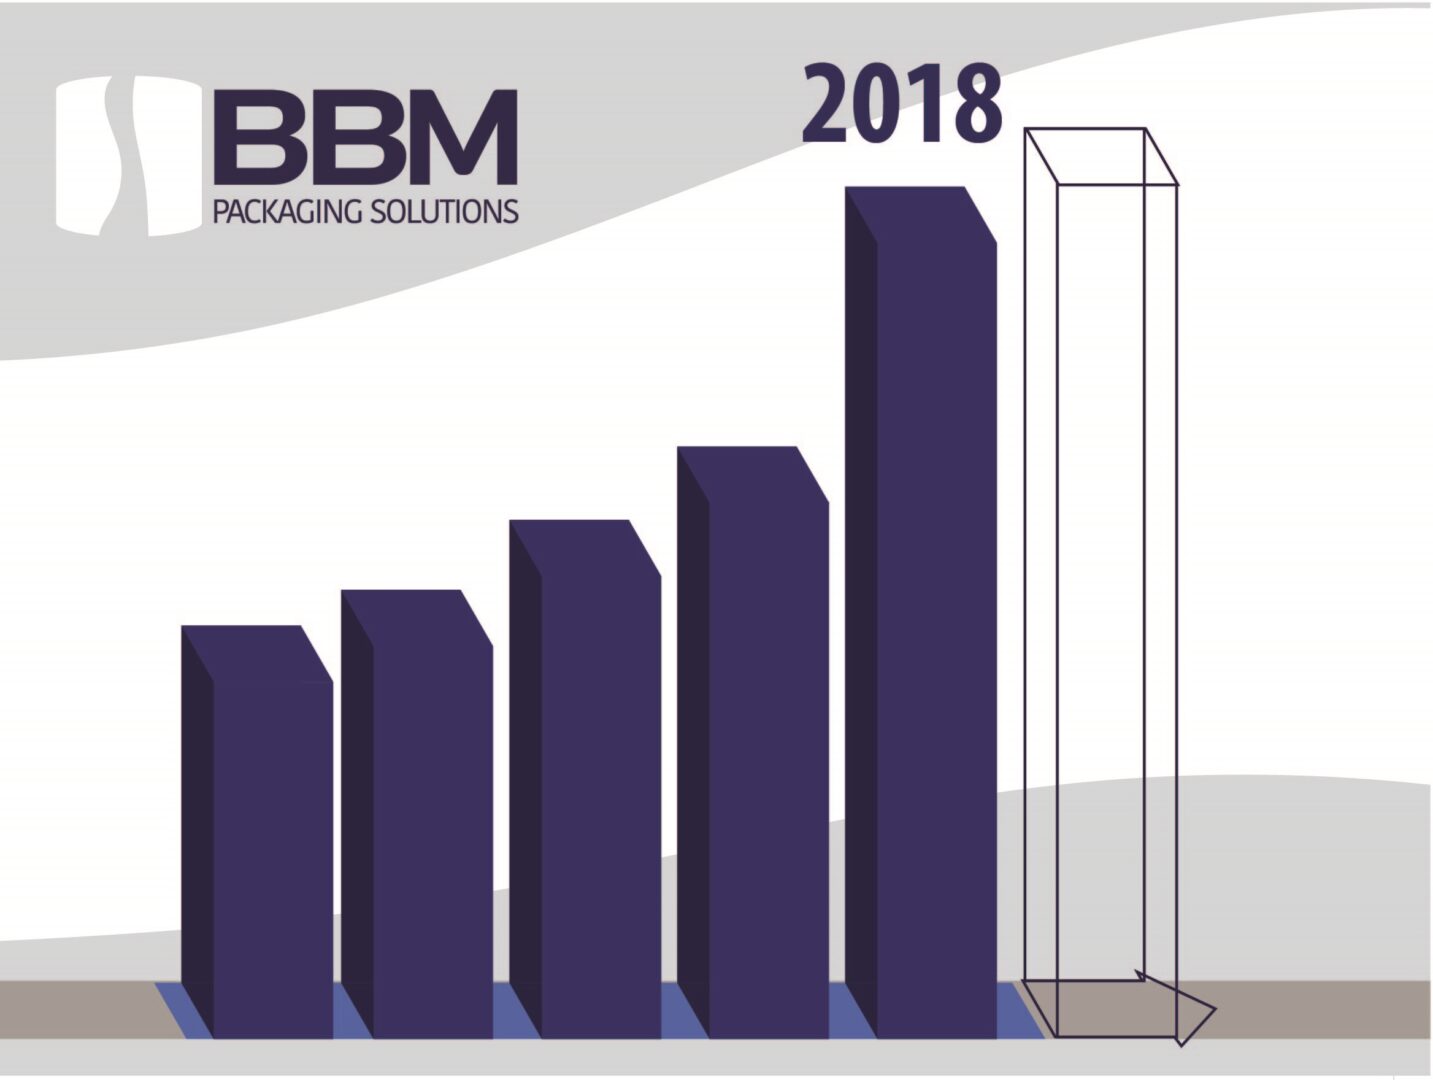 BBM Packaging – 2018 un anno di crescita esponenziale